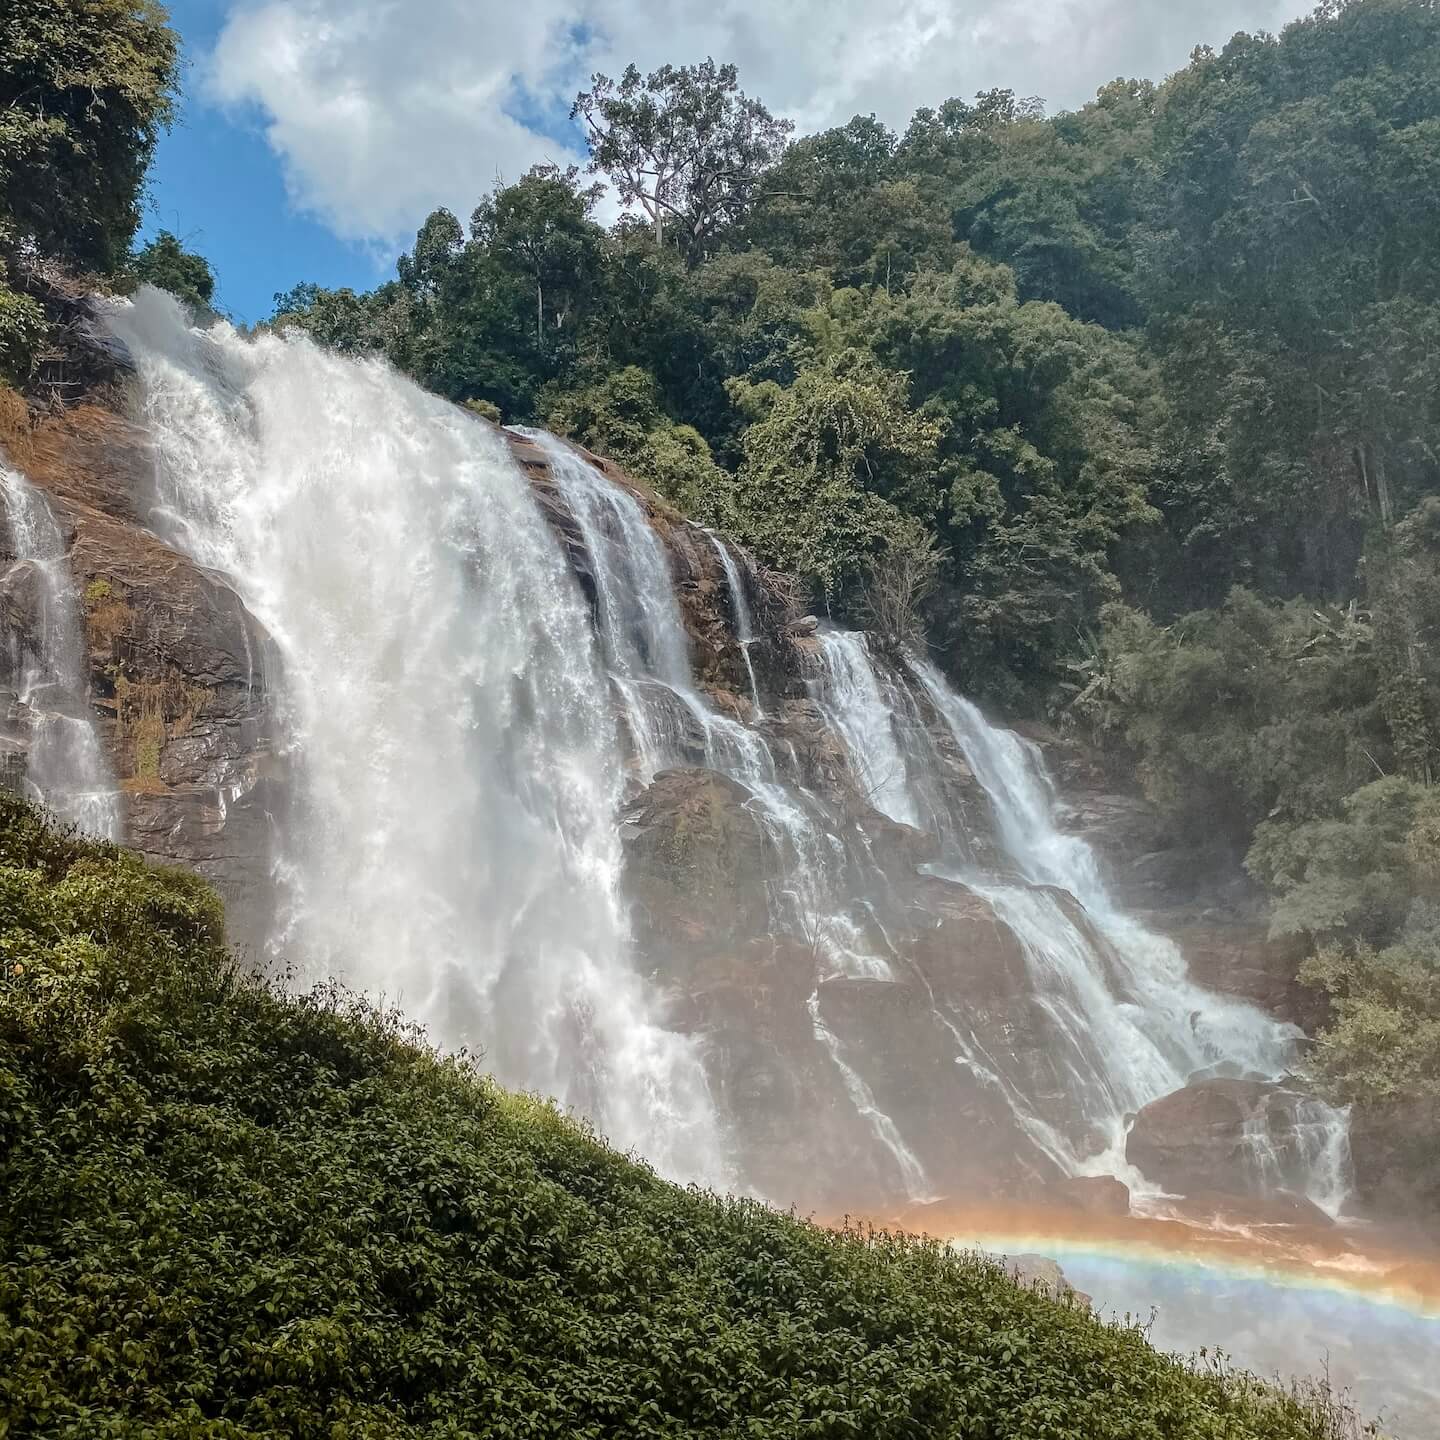 Wateterfalls with rainbow at Doi Inthanon National Park